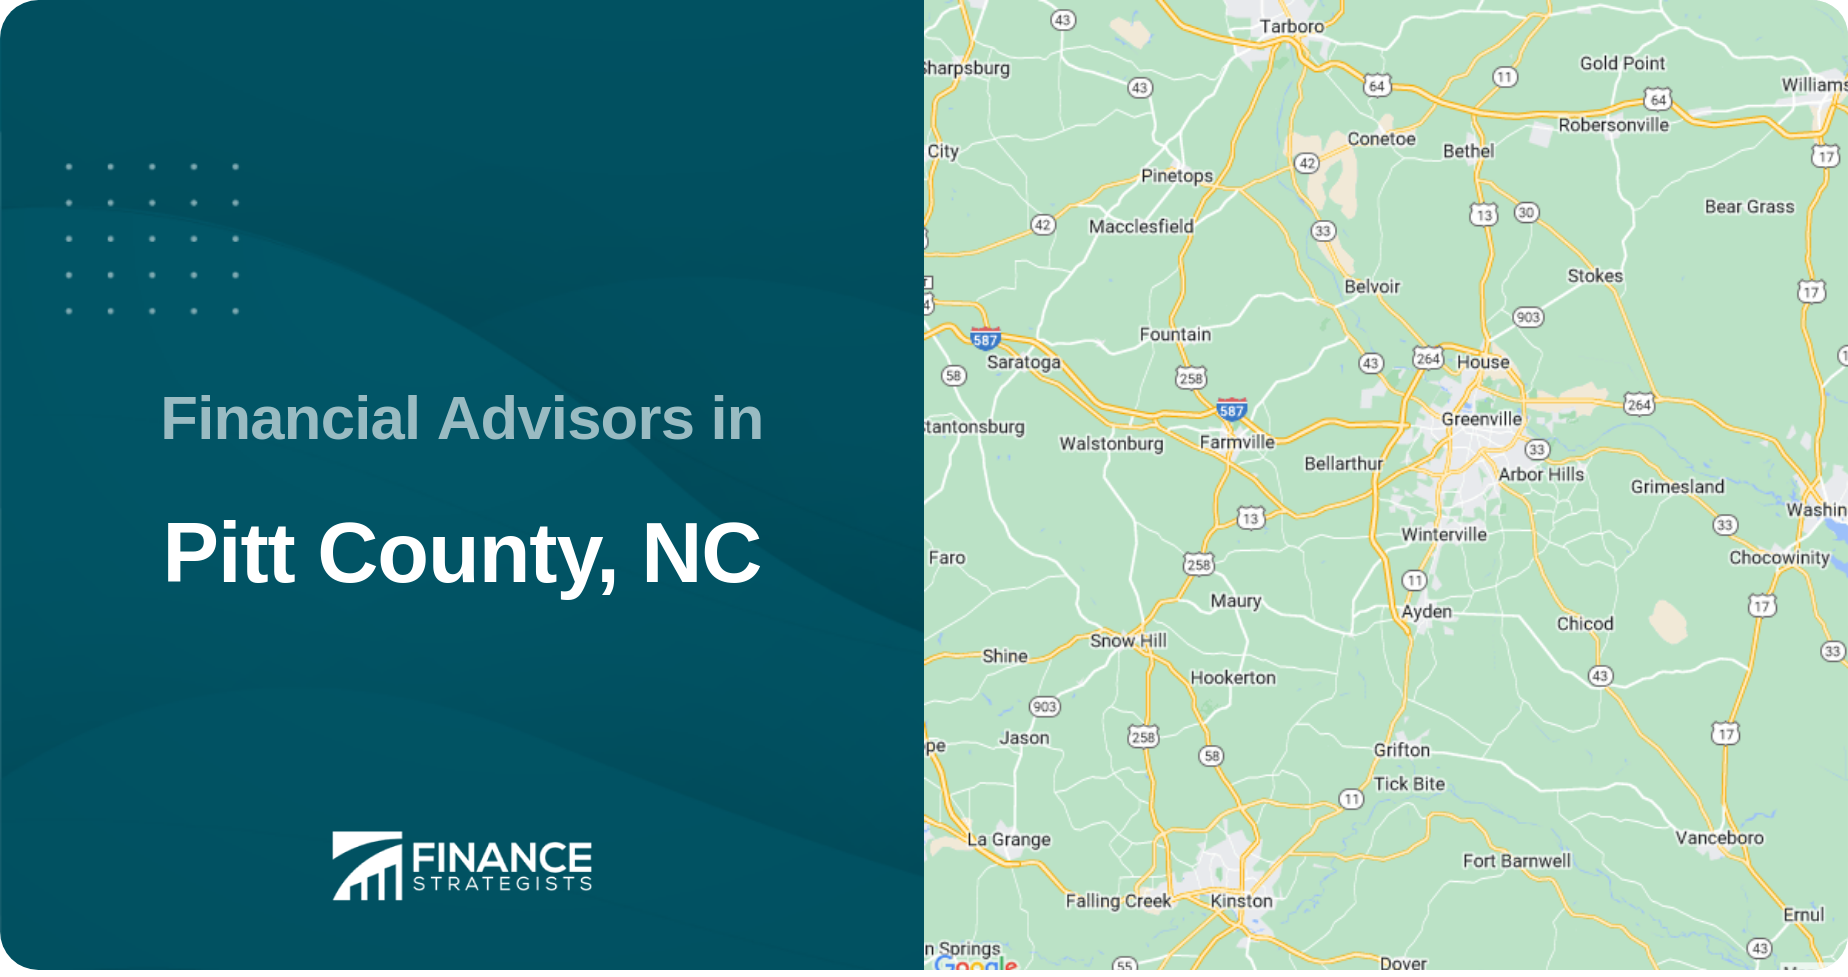 Financial Advisors in Pitt County, NC